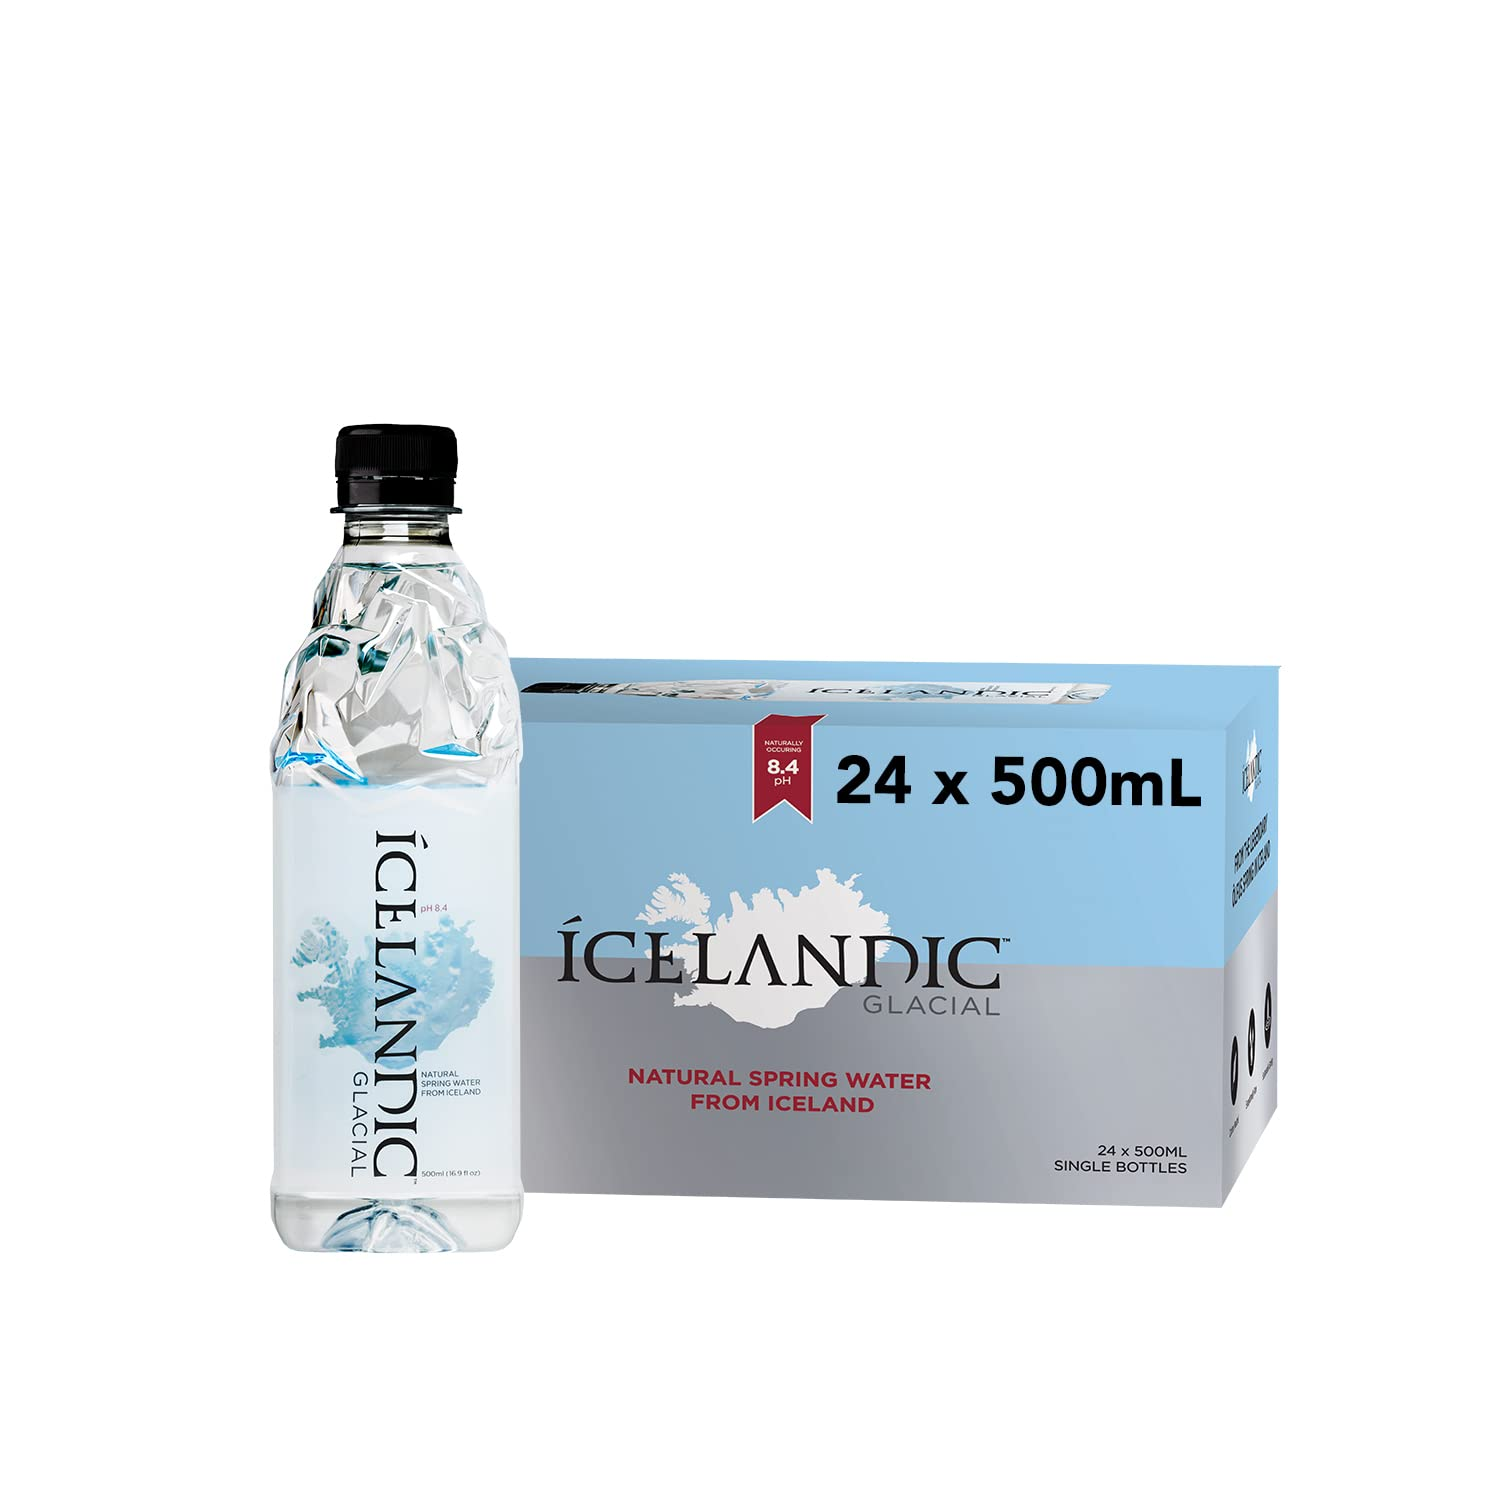 Icelandic Glacial water